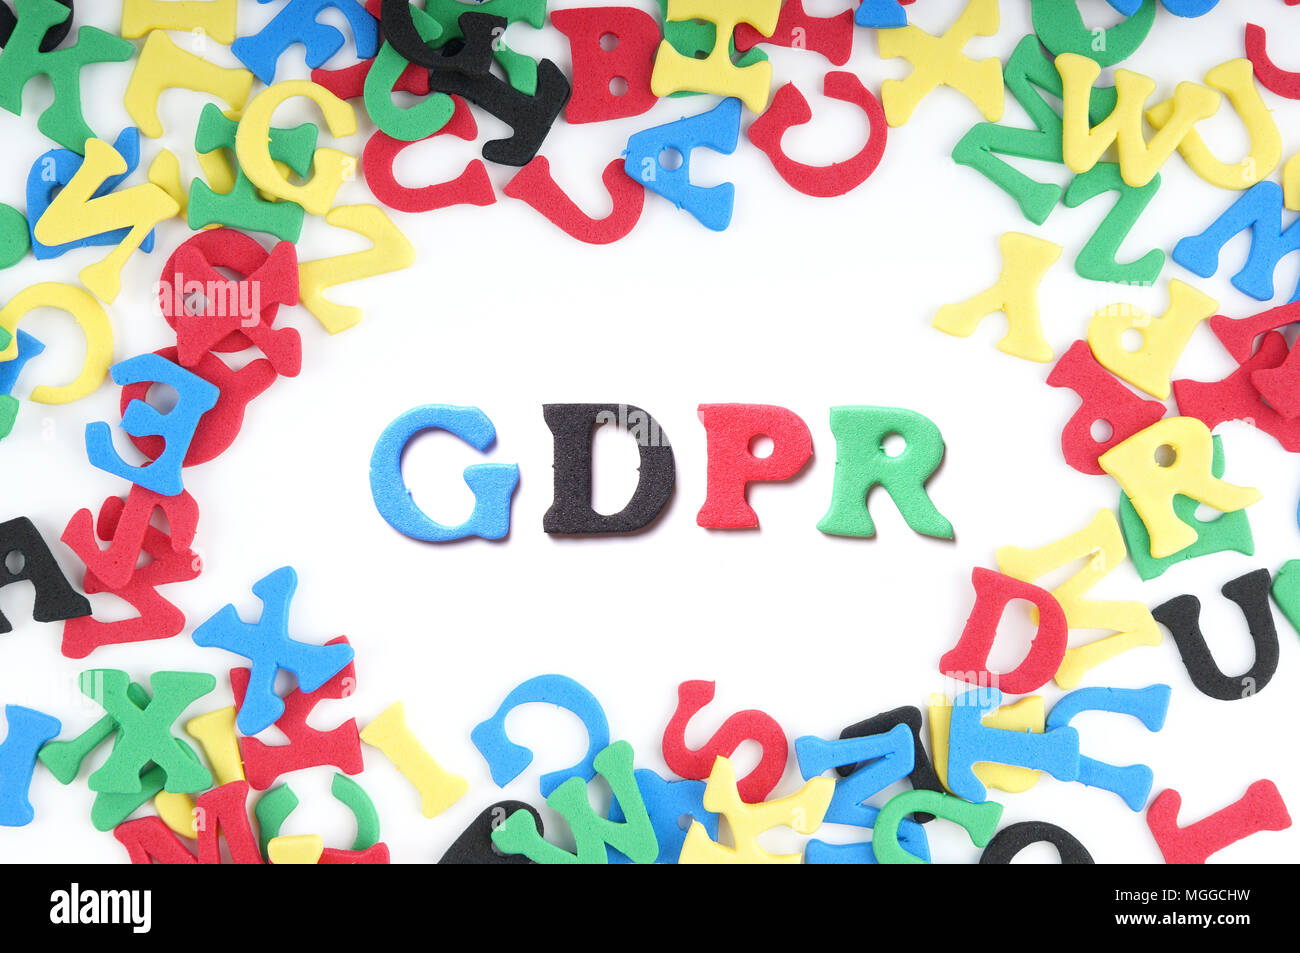 GDPR general data protection regulation Stock Photo